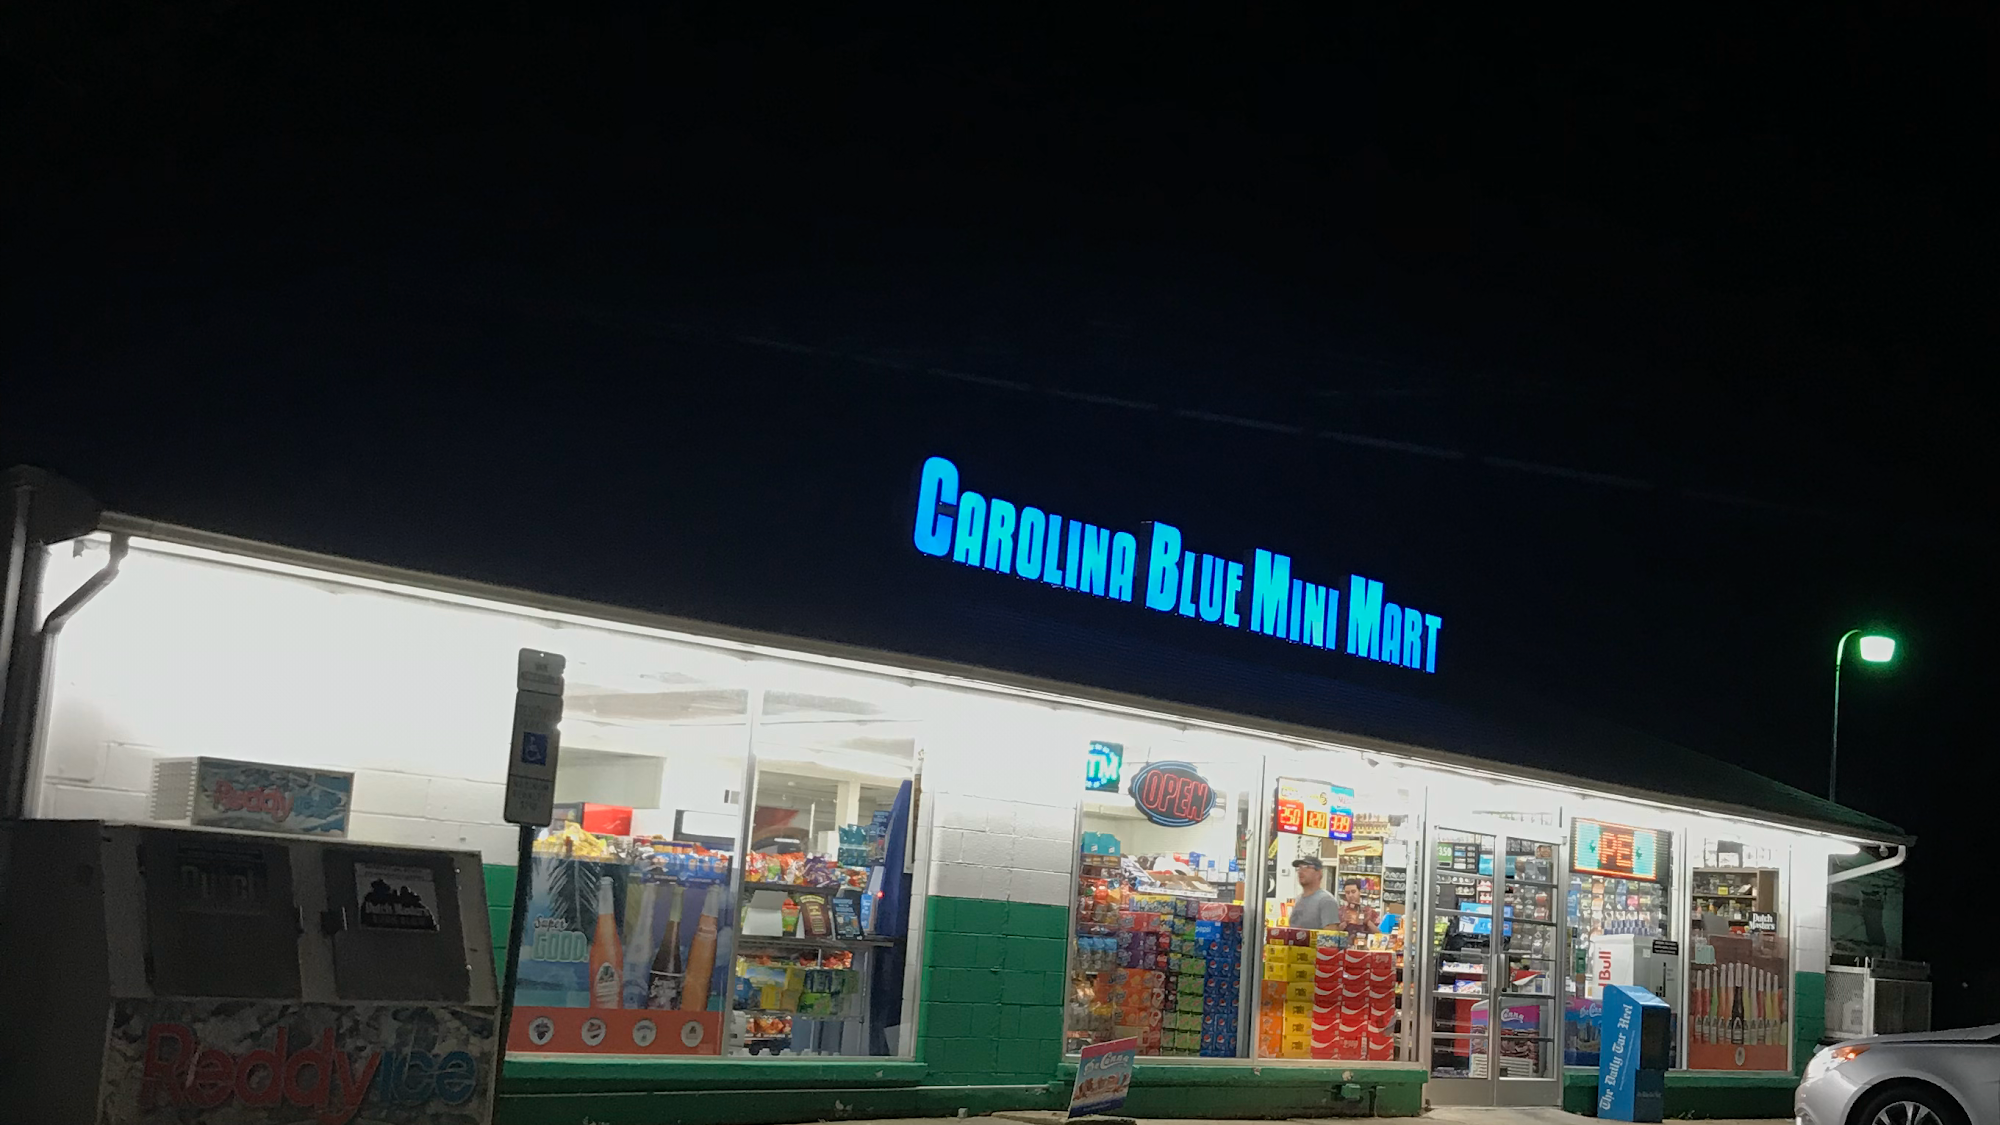 Carolina Blue Mini Mart